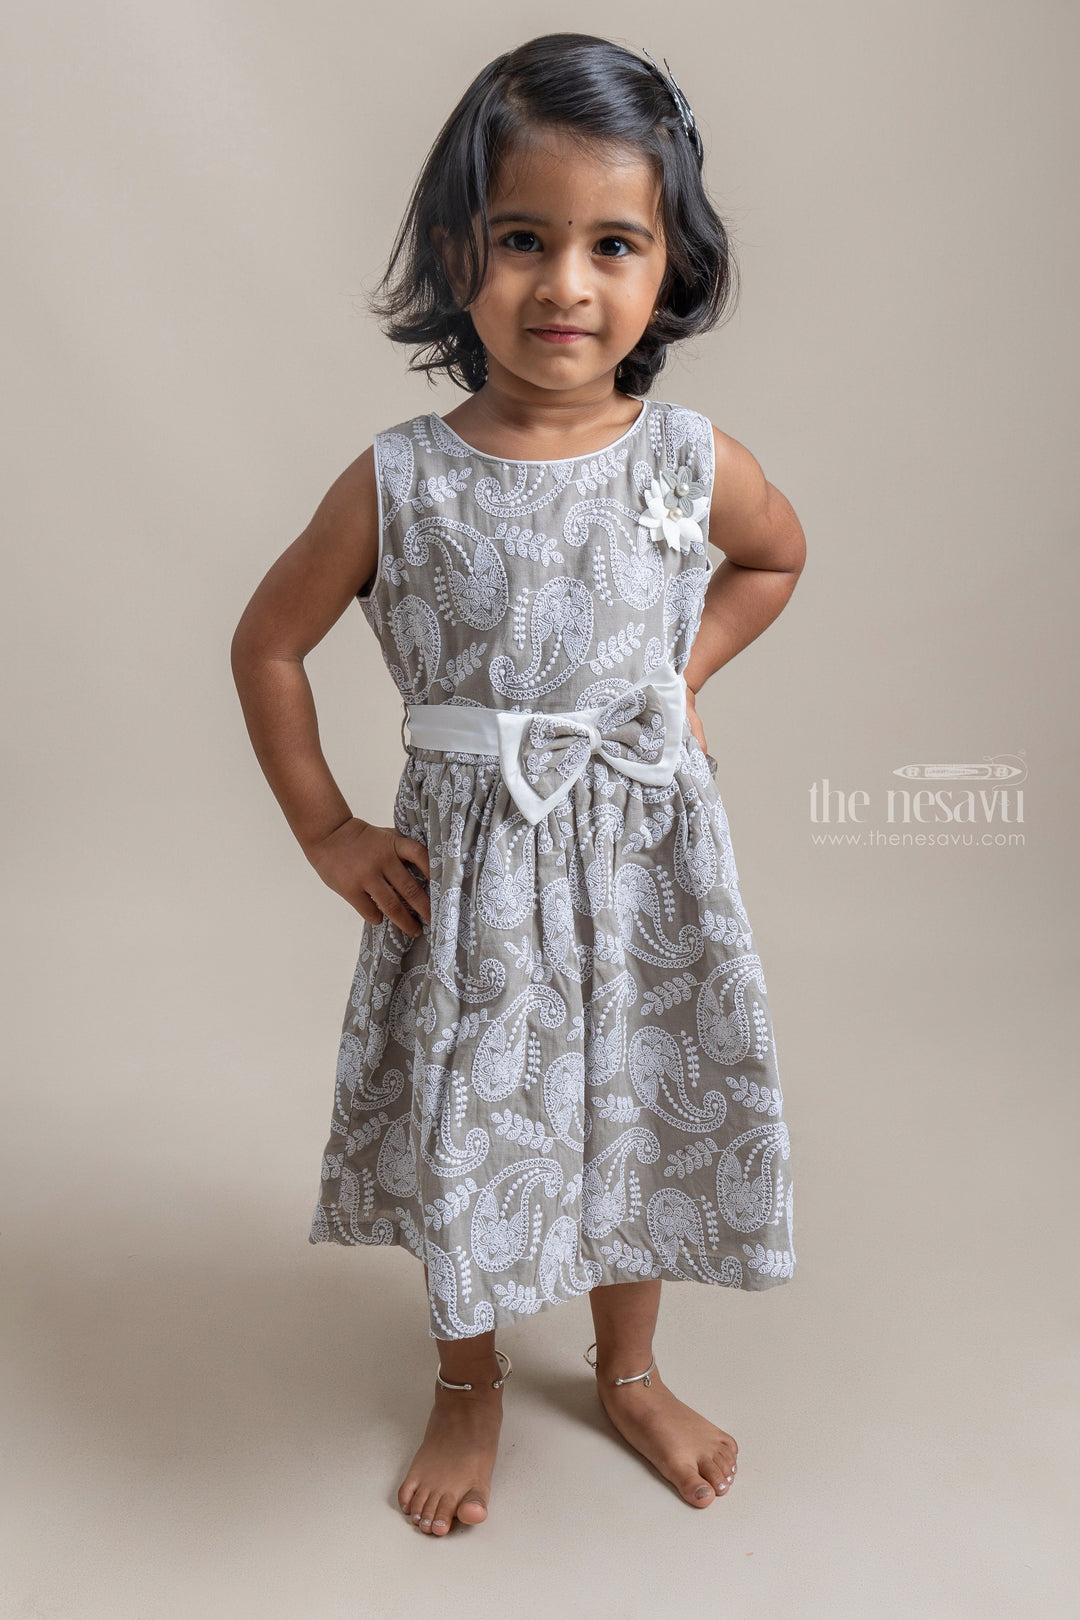 The Nesavu Frocks & Dresses Pretty Paiseley Embroidered Sleeveless Gray Cotton Frock For Little Girls psr silks Nesavu 14 (6M) / Gray GFC1030B